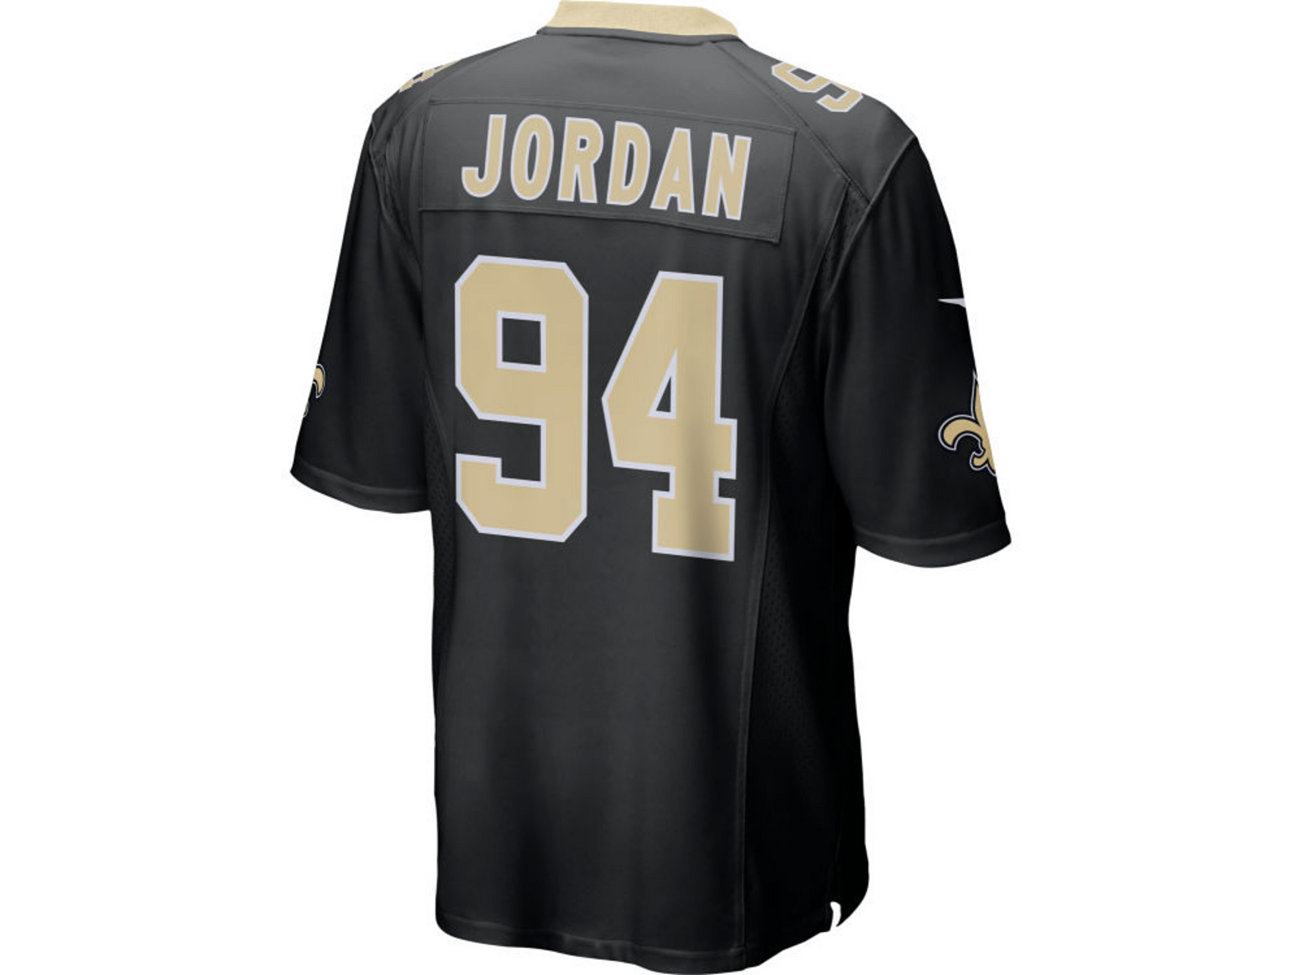 Мужское игровое джерси New Orleans Saints - Кэмерон Джордан Nike